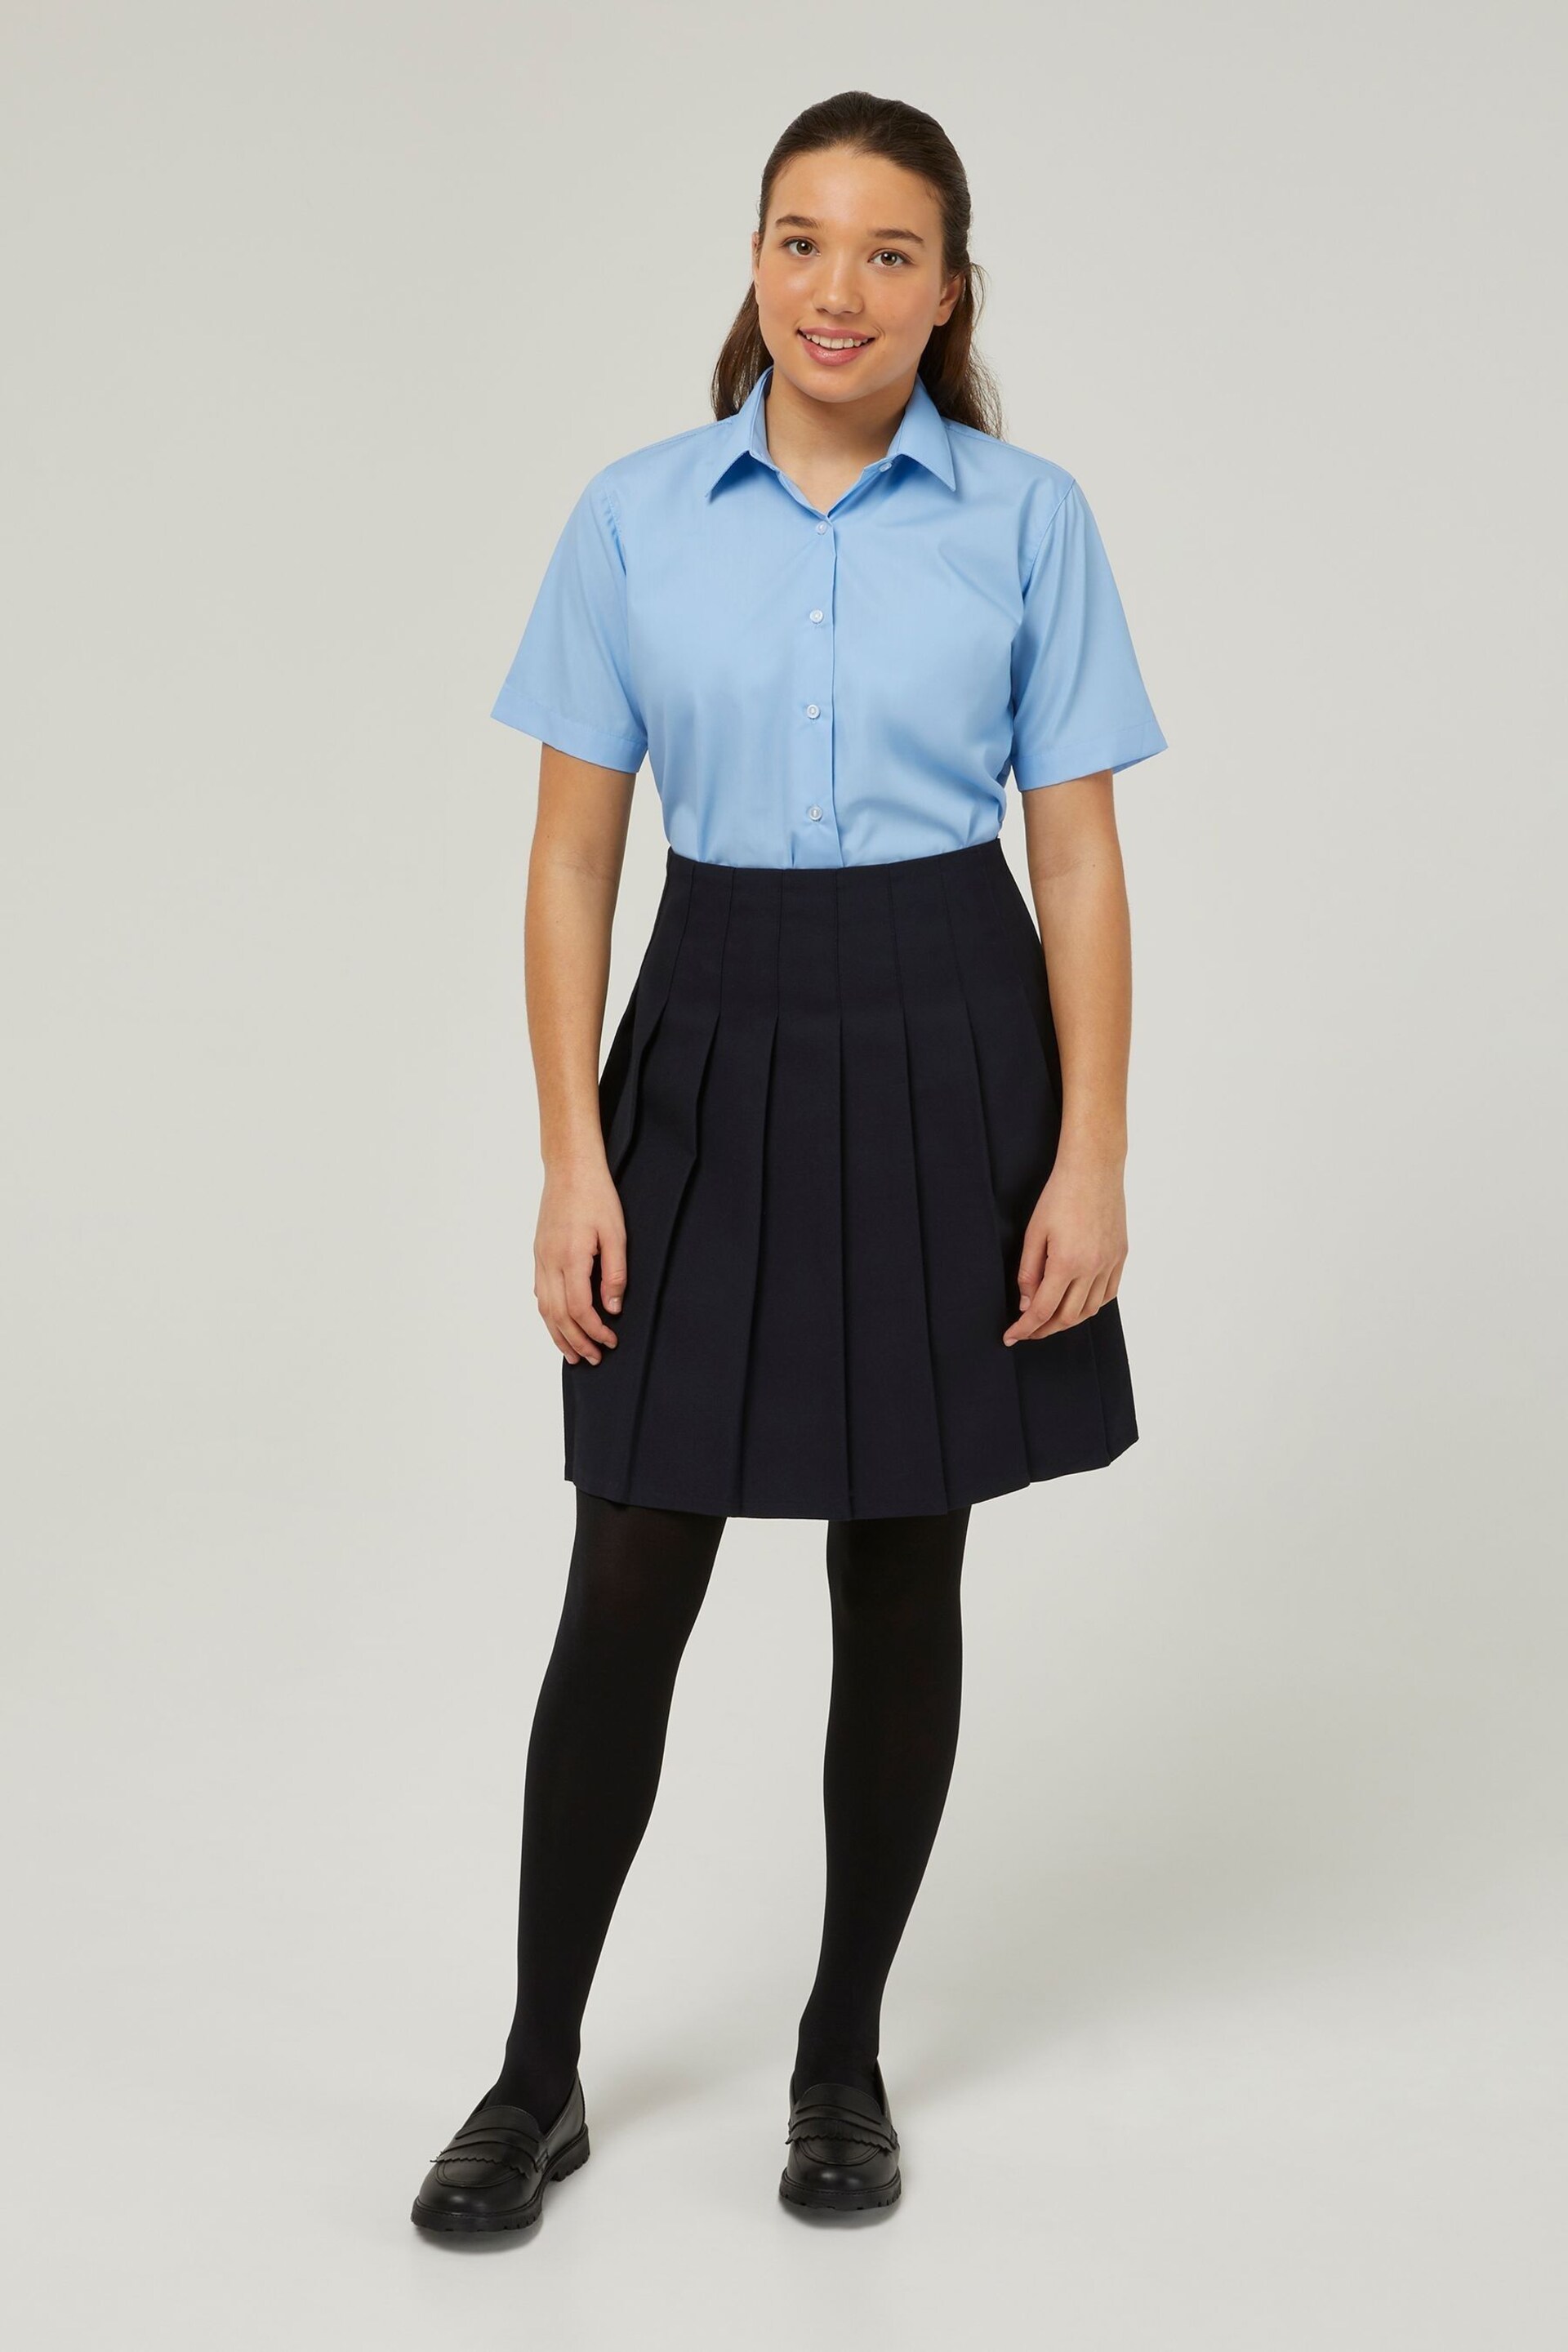 Trutex Navy 18" Stitch Down Permanent Pleats School Skirt (10-17 Yrs) - Image 1 of 5